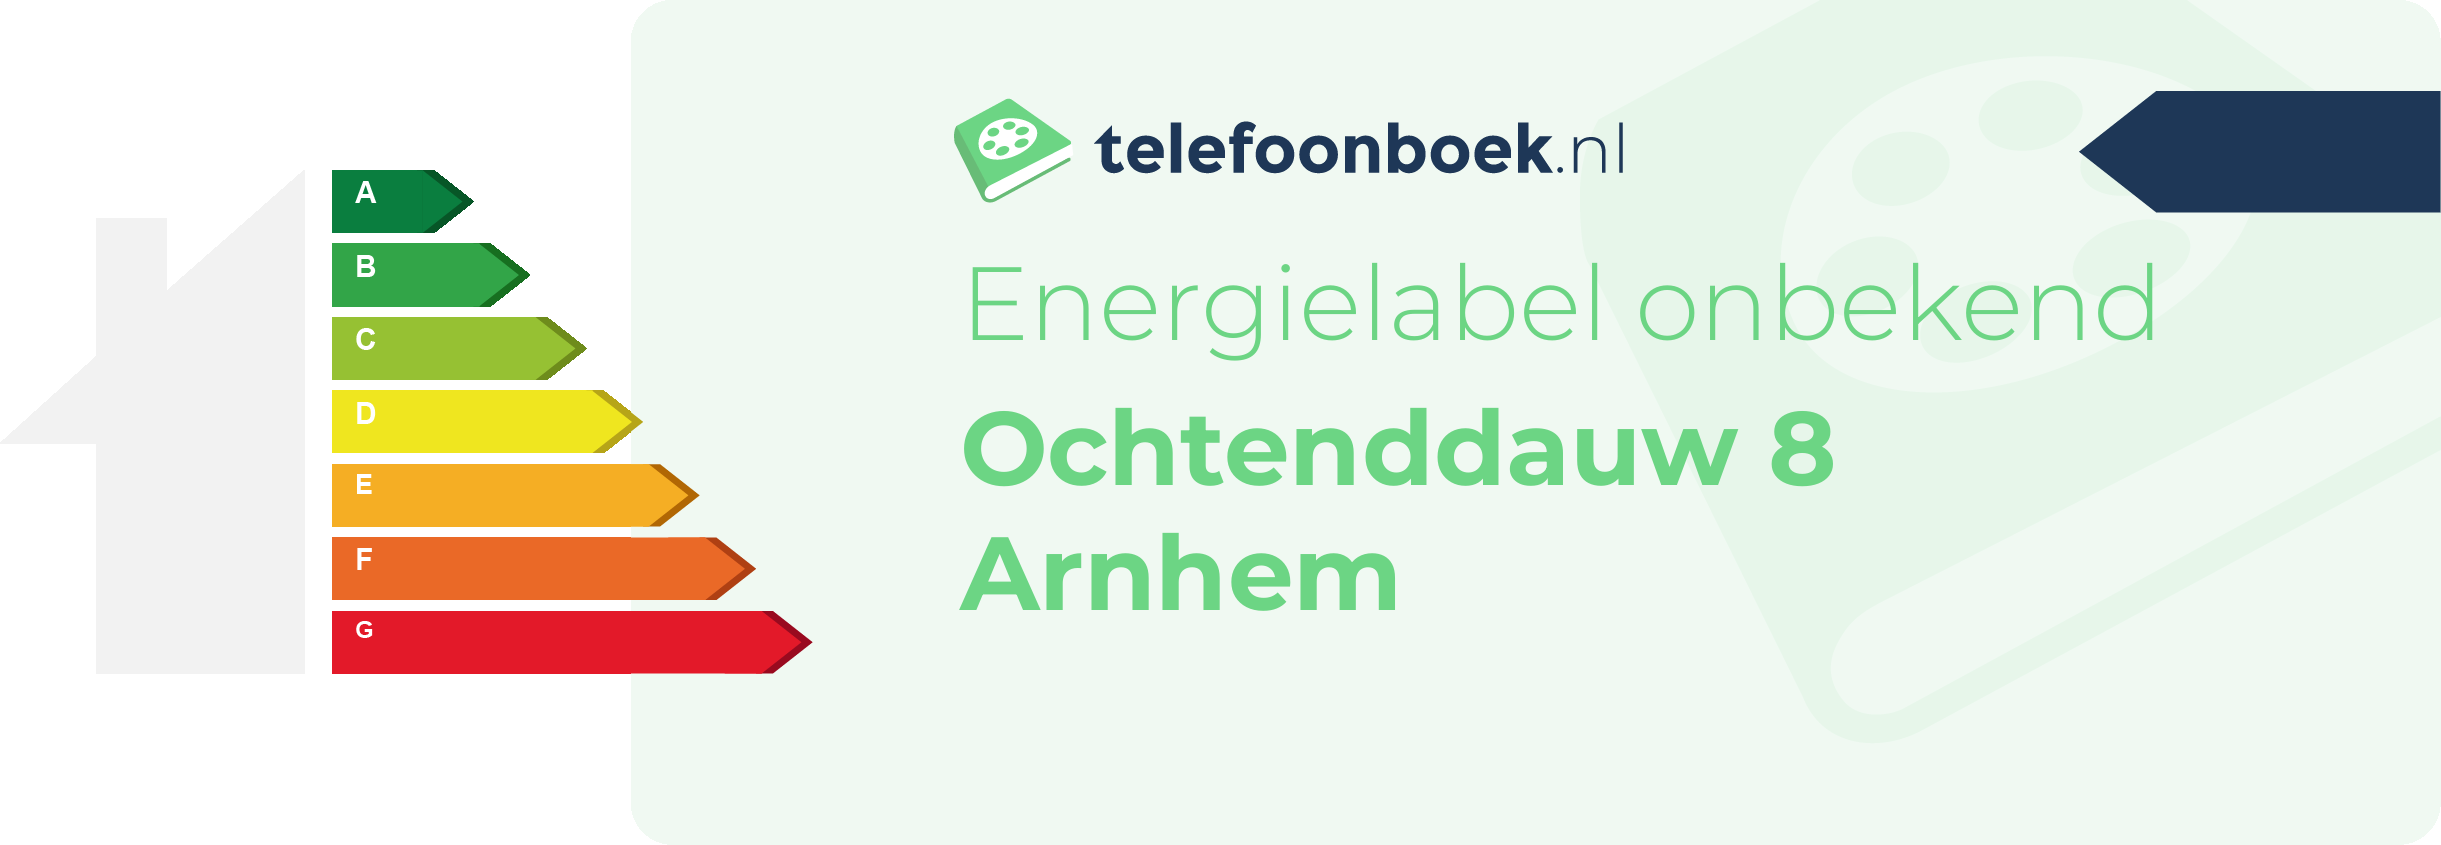 Energielabel Ochtenddauw 8 Arnhem